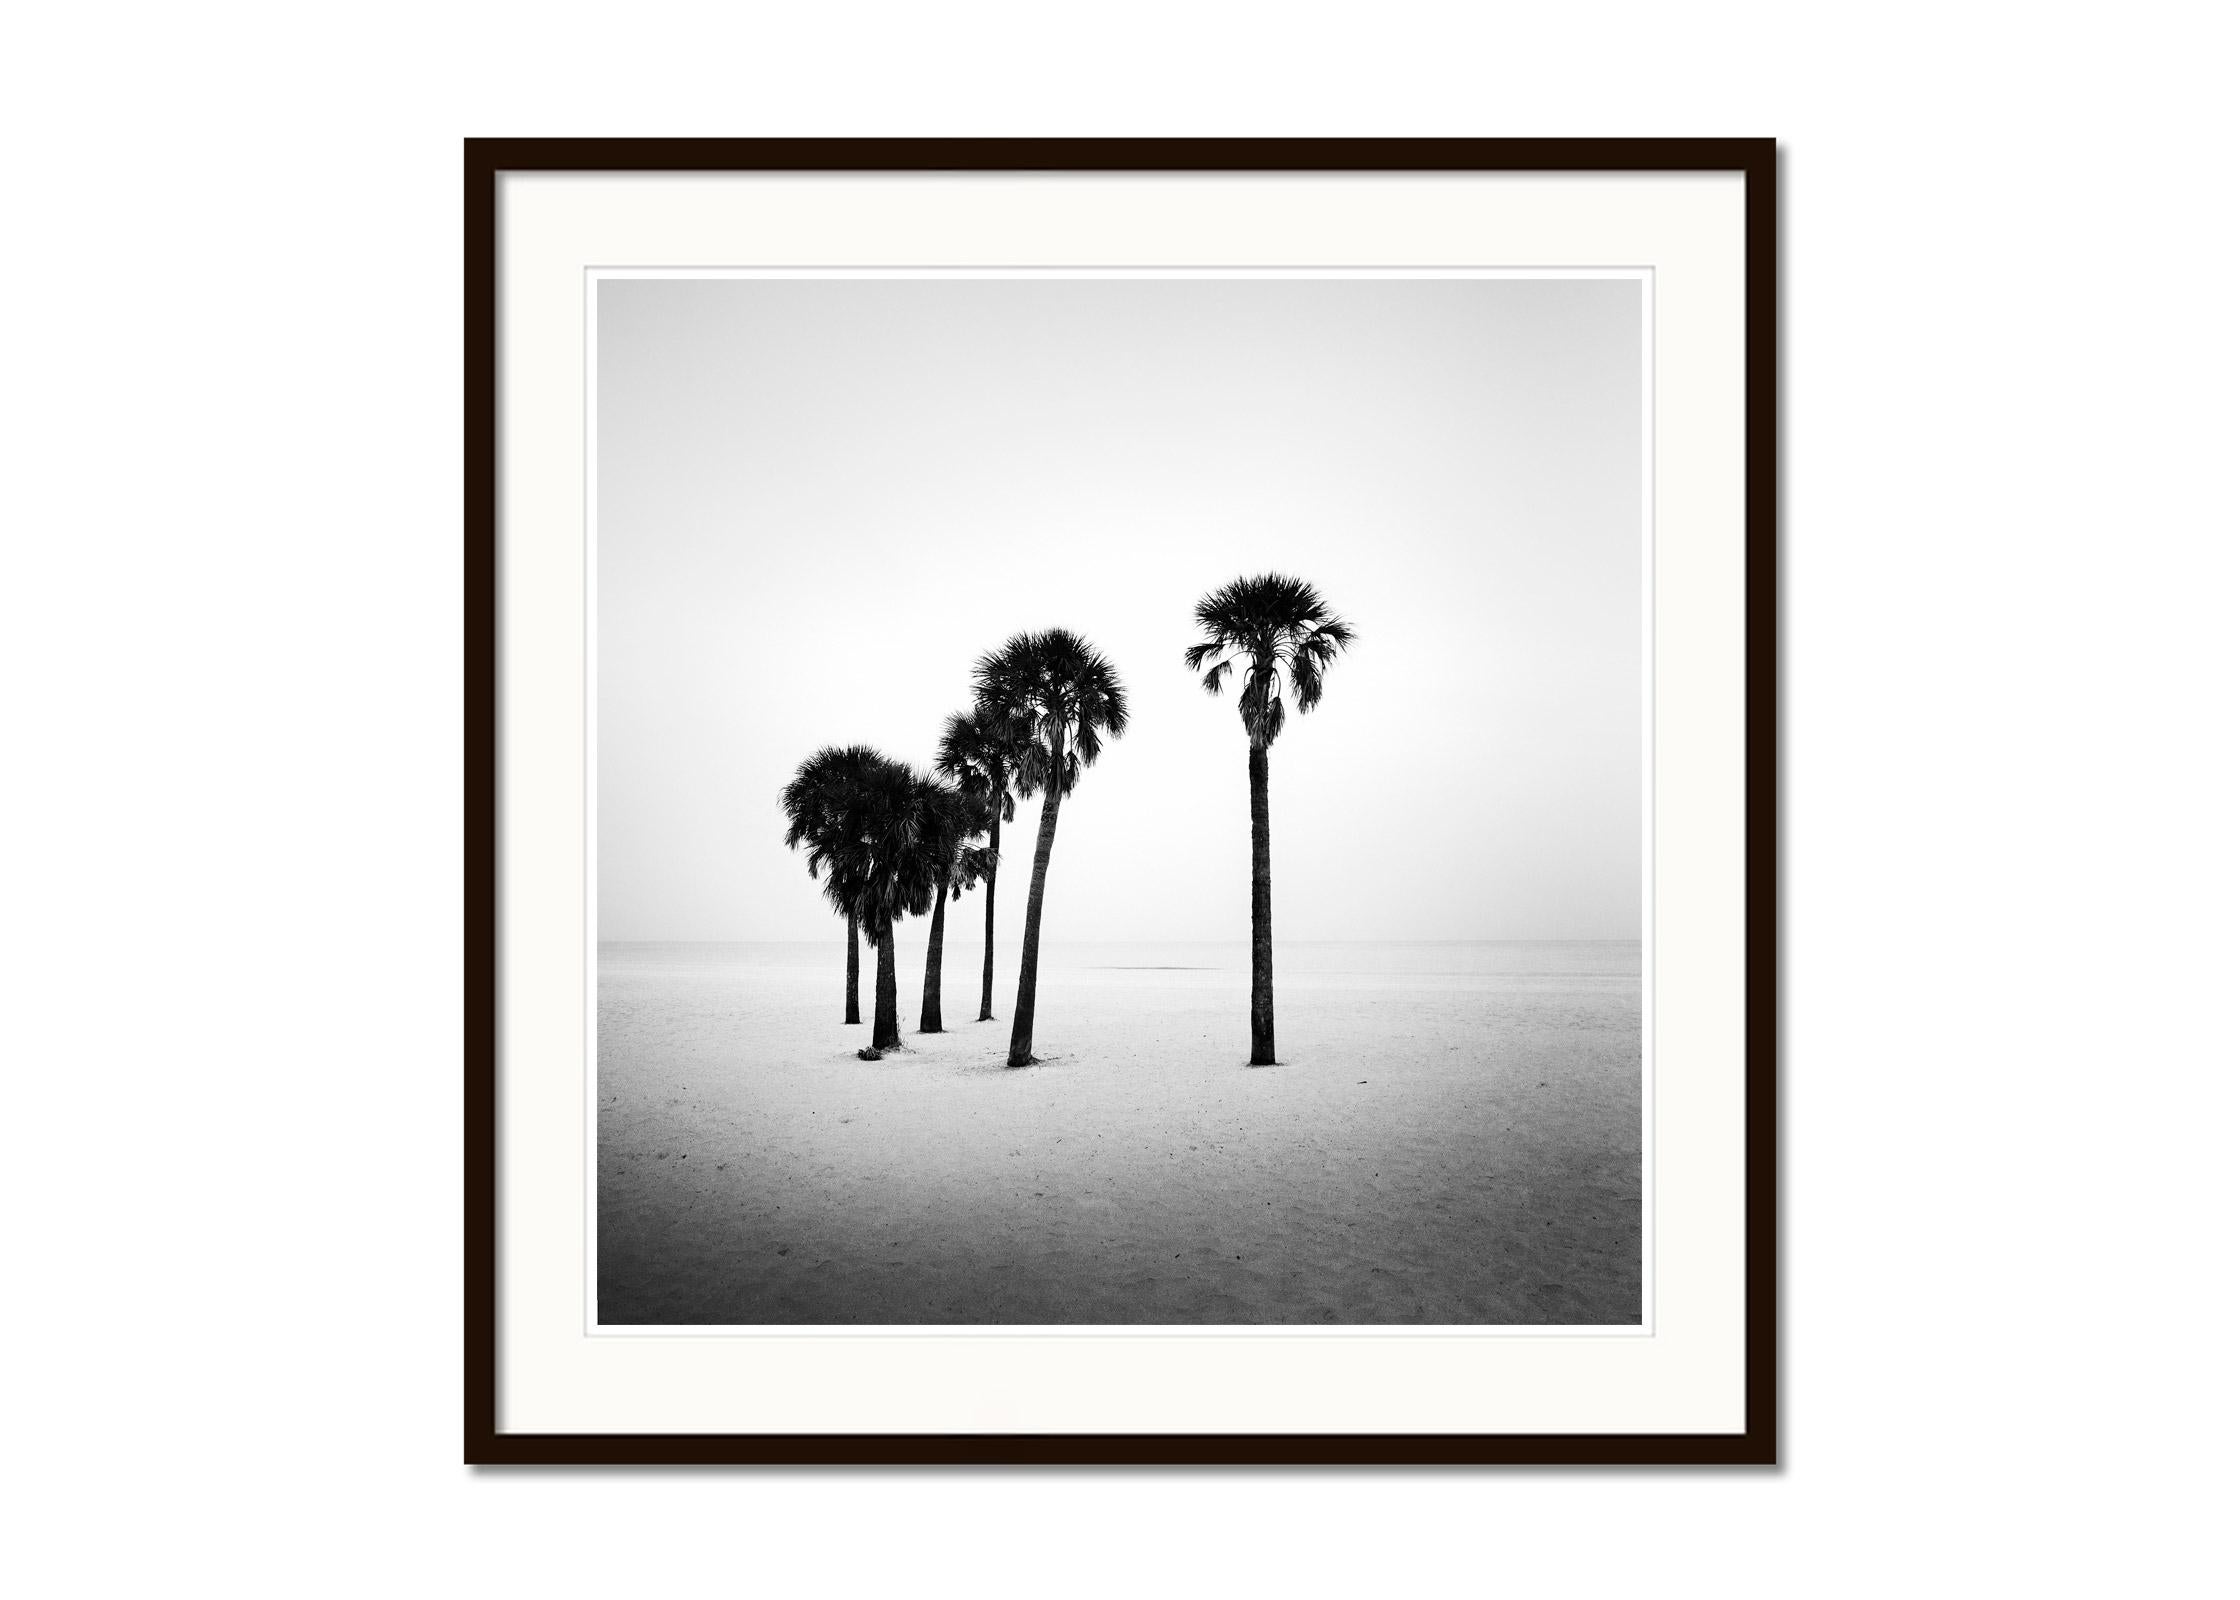 minimalist palm tree